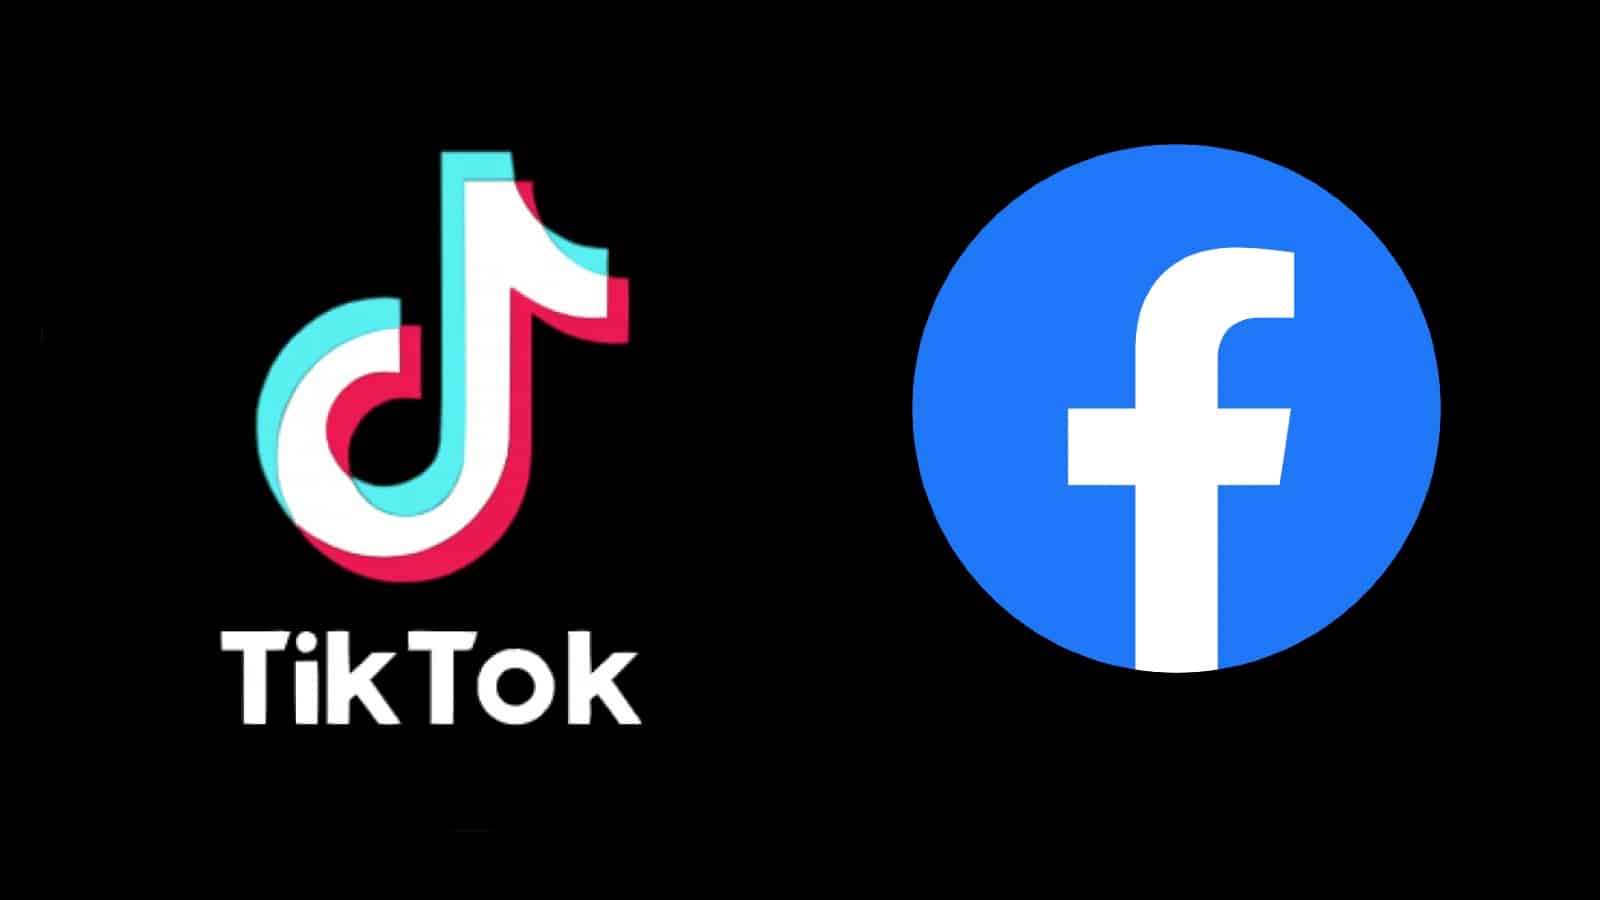 TikTok and Facebook logos on plain black background